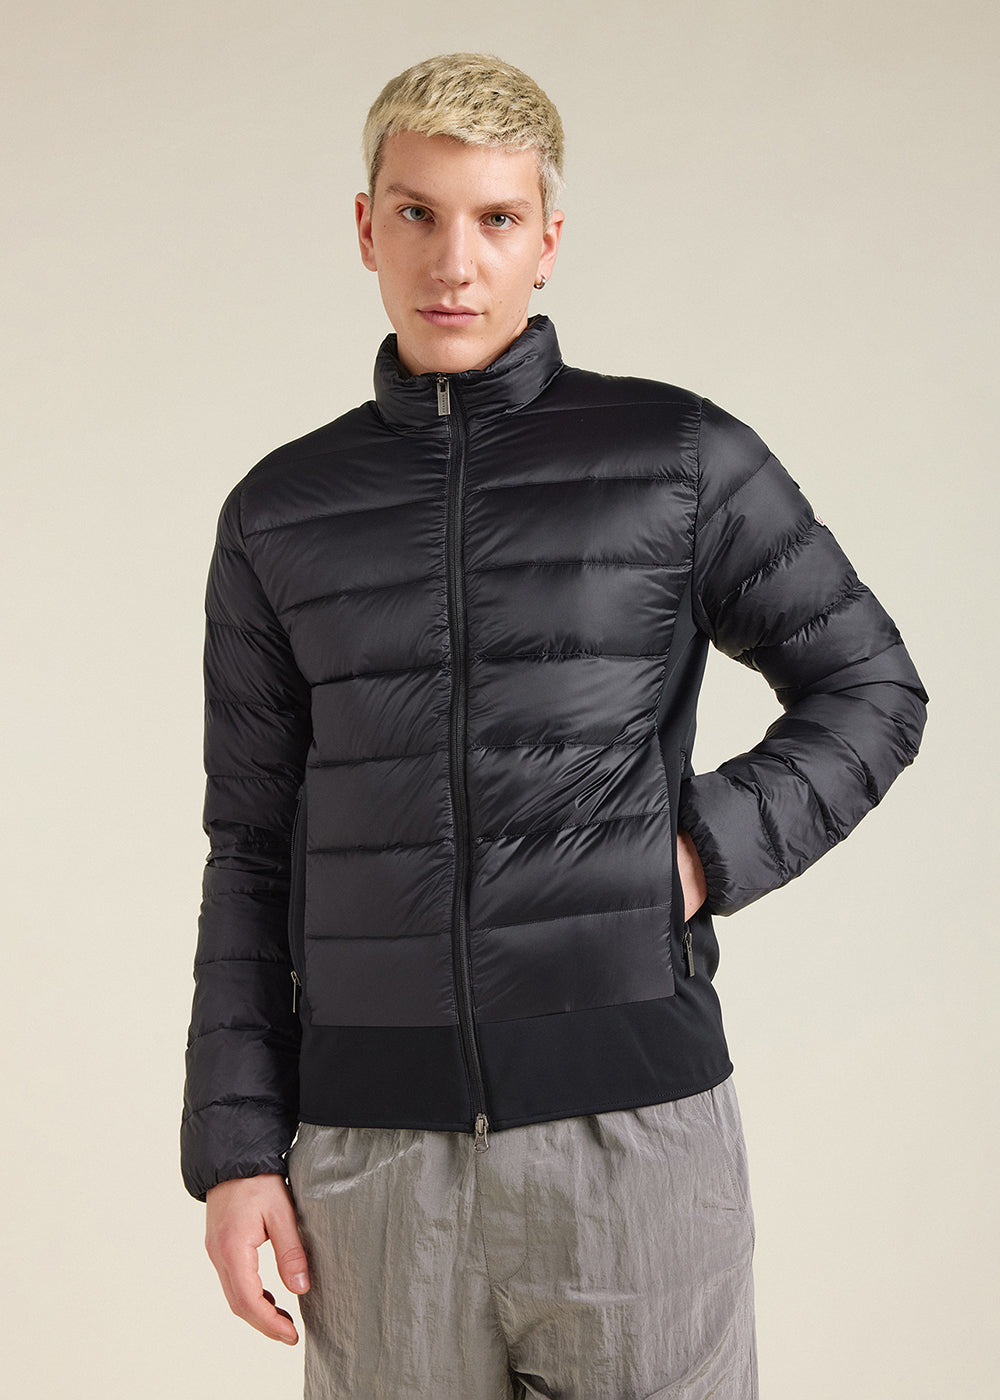 Men's Pyrenex Flow lighweight bi-fabric down jacket black-2